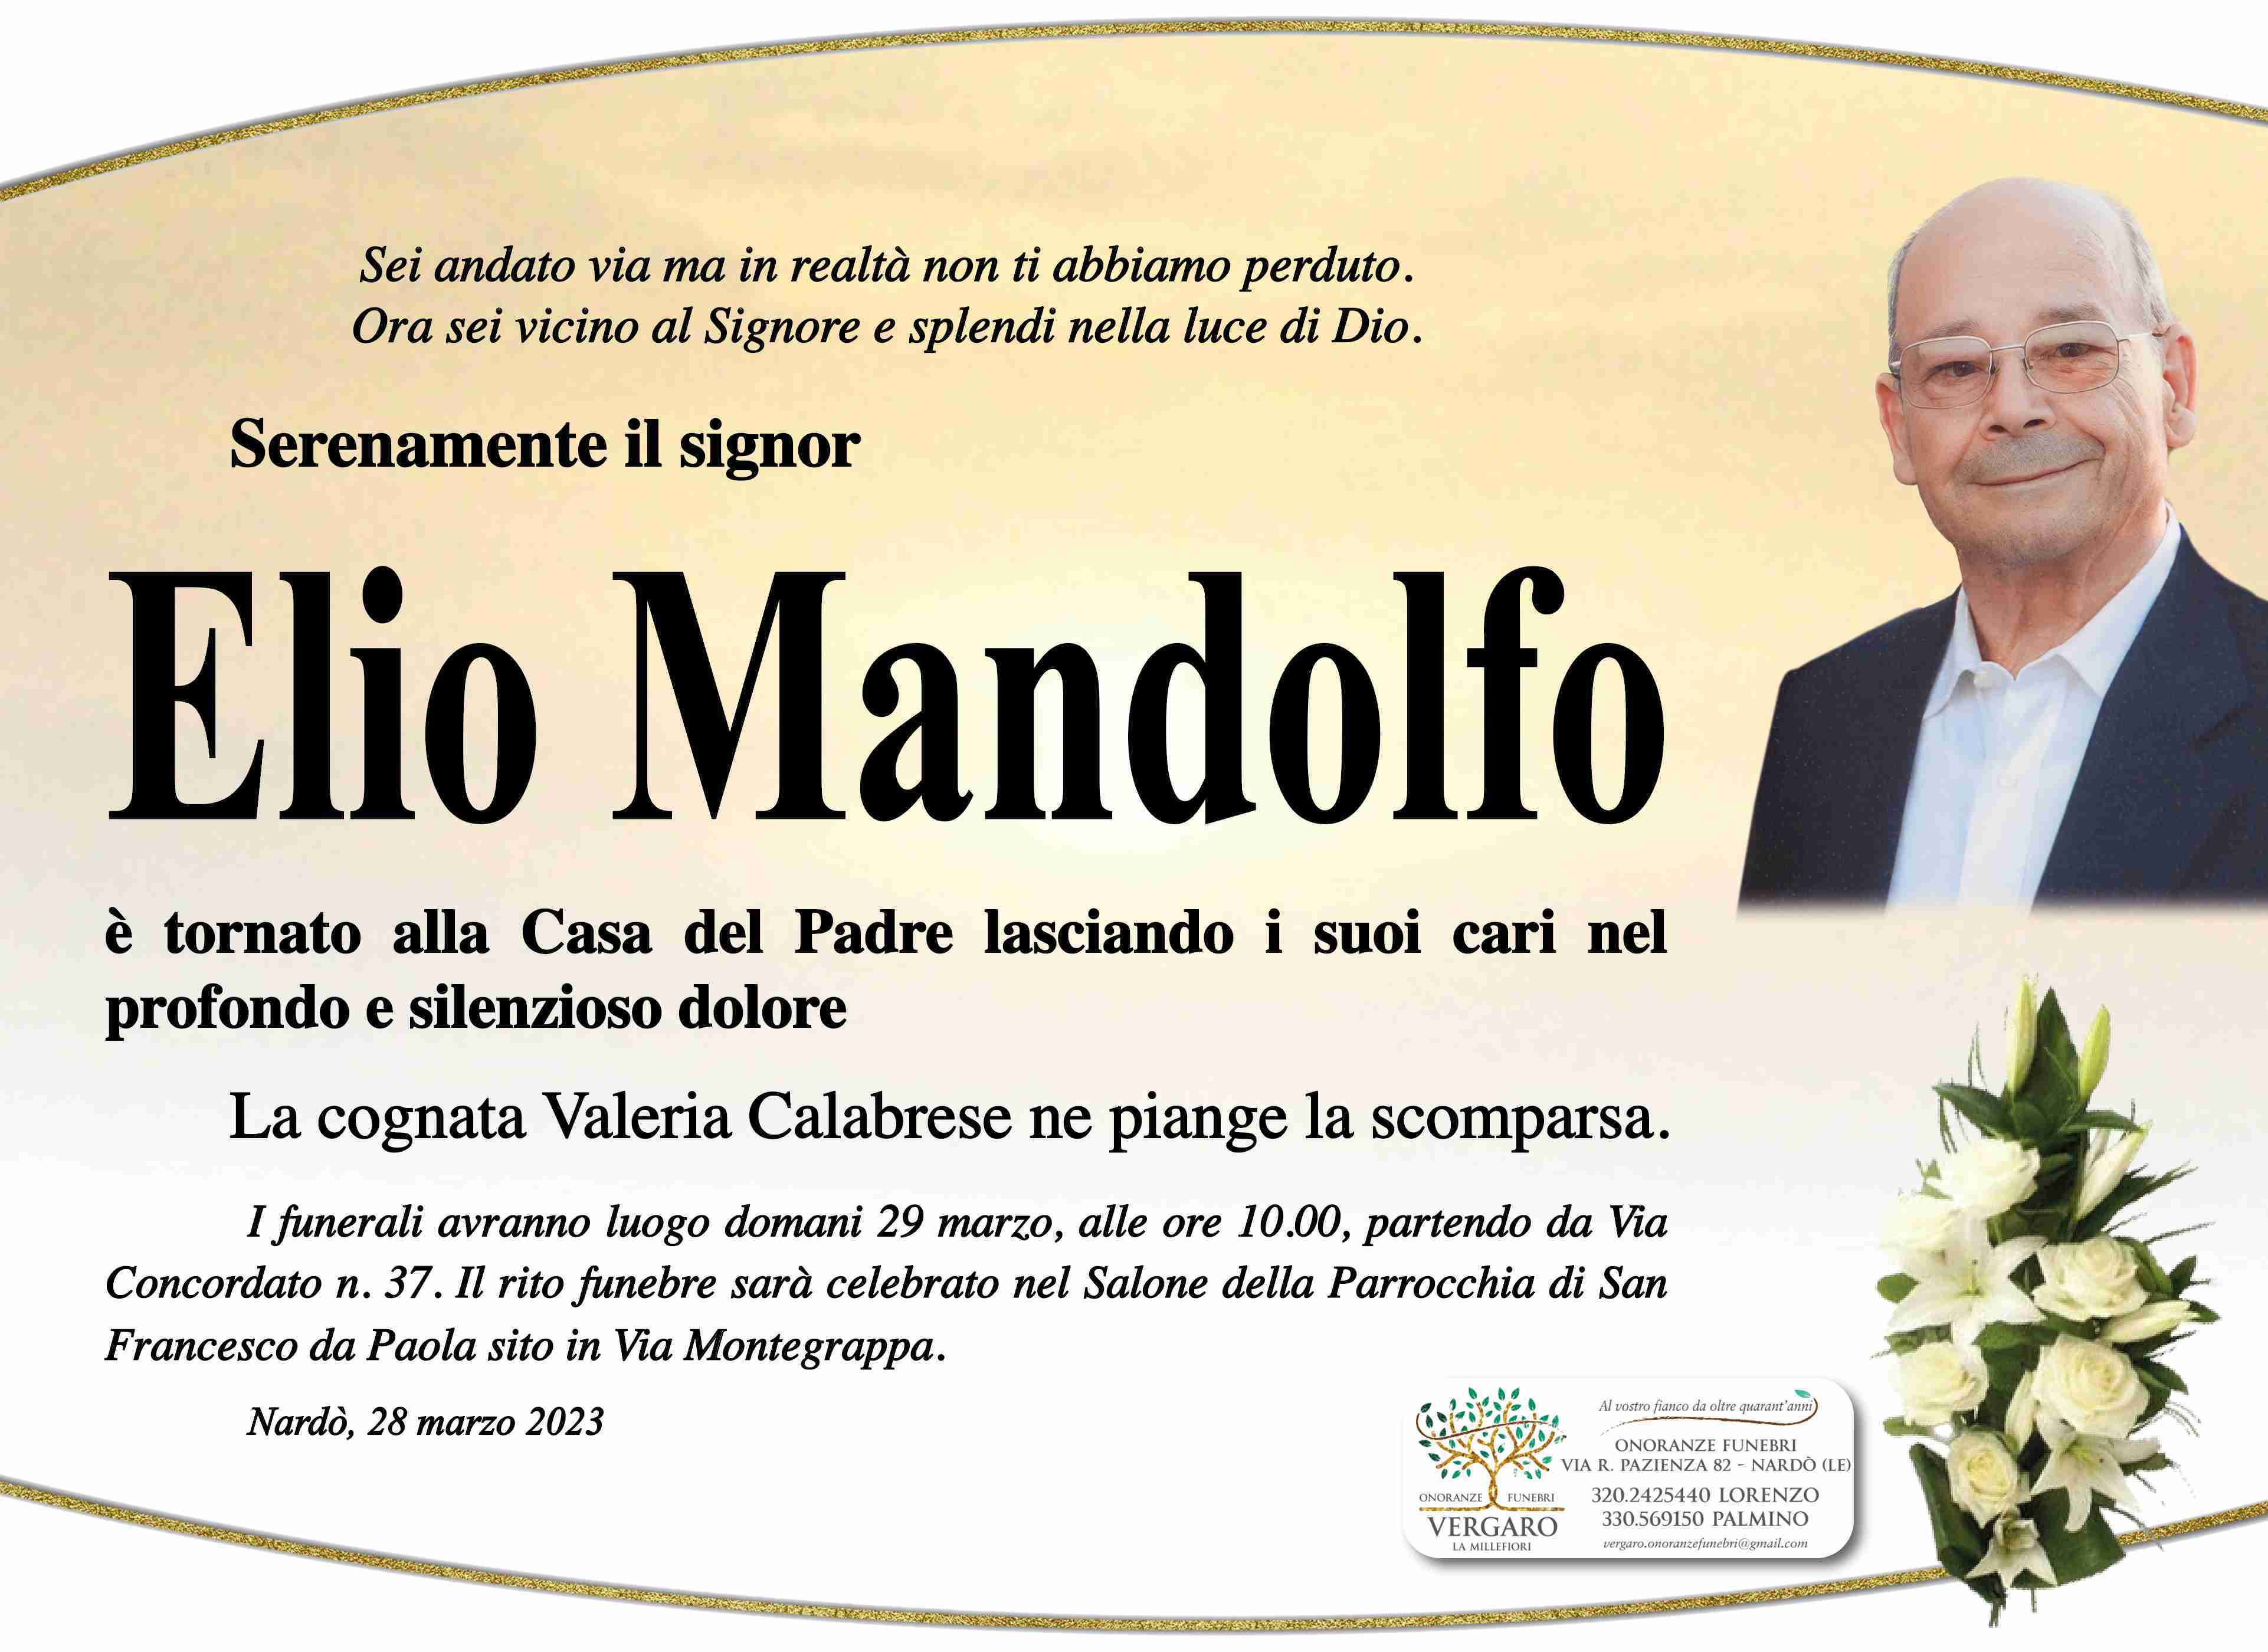 Elio Mandolfo